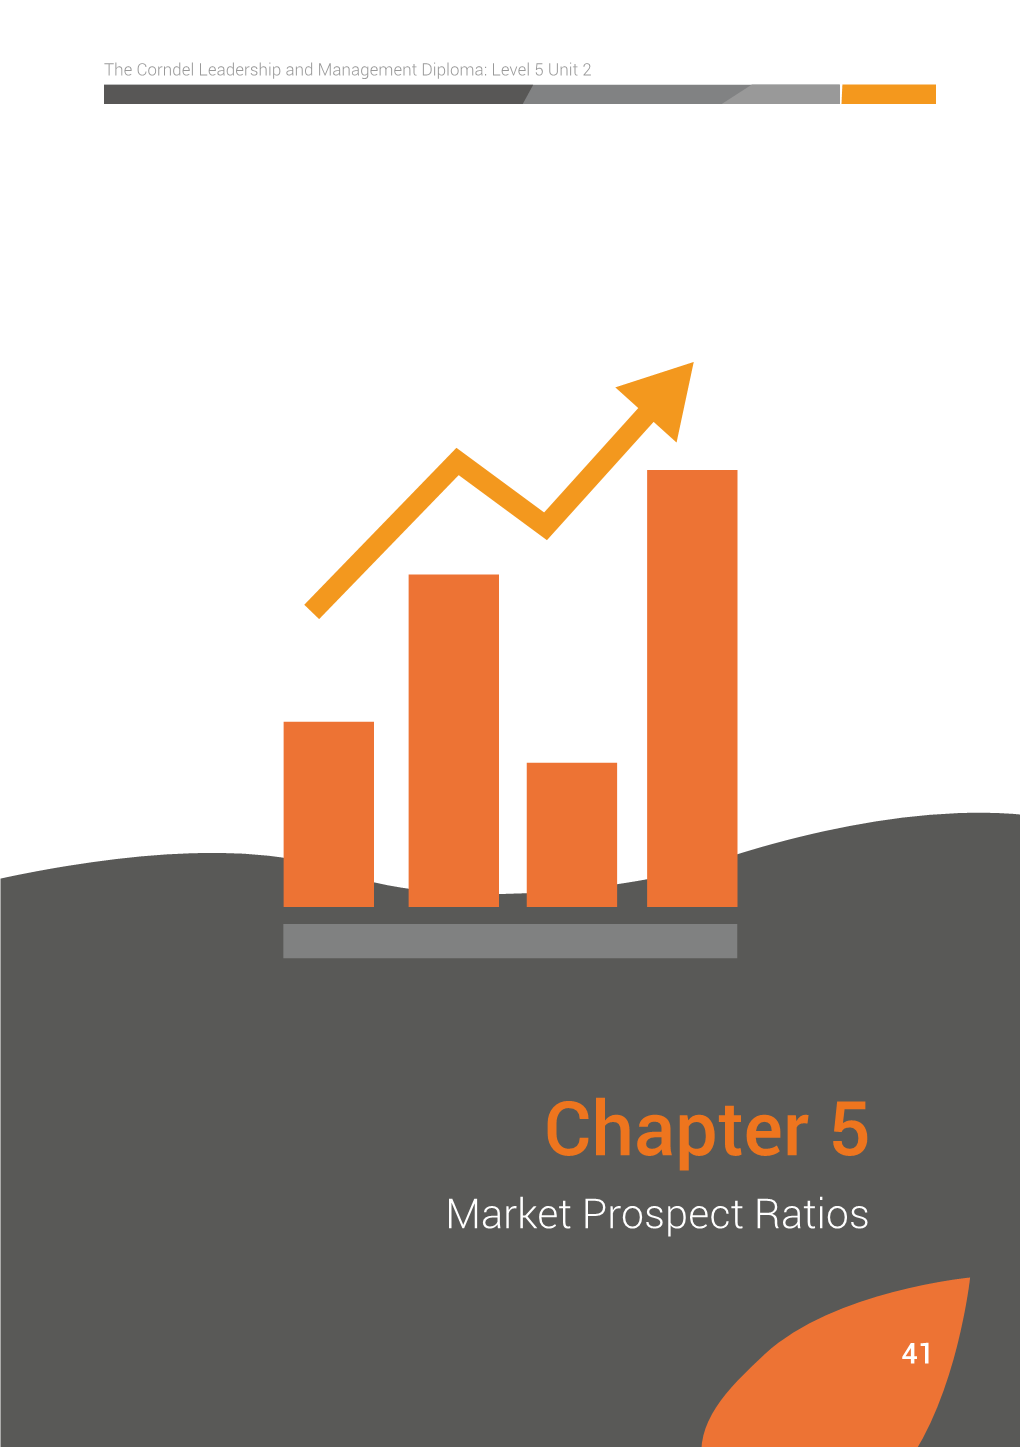 Chapter 5 Market Prospect Ratios